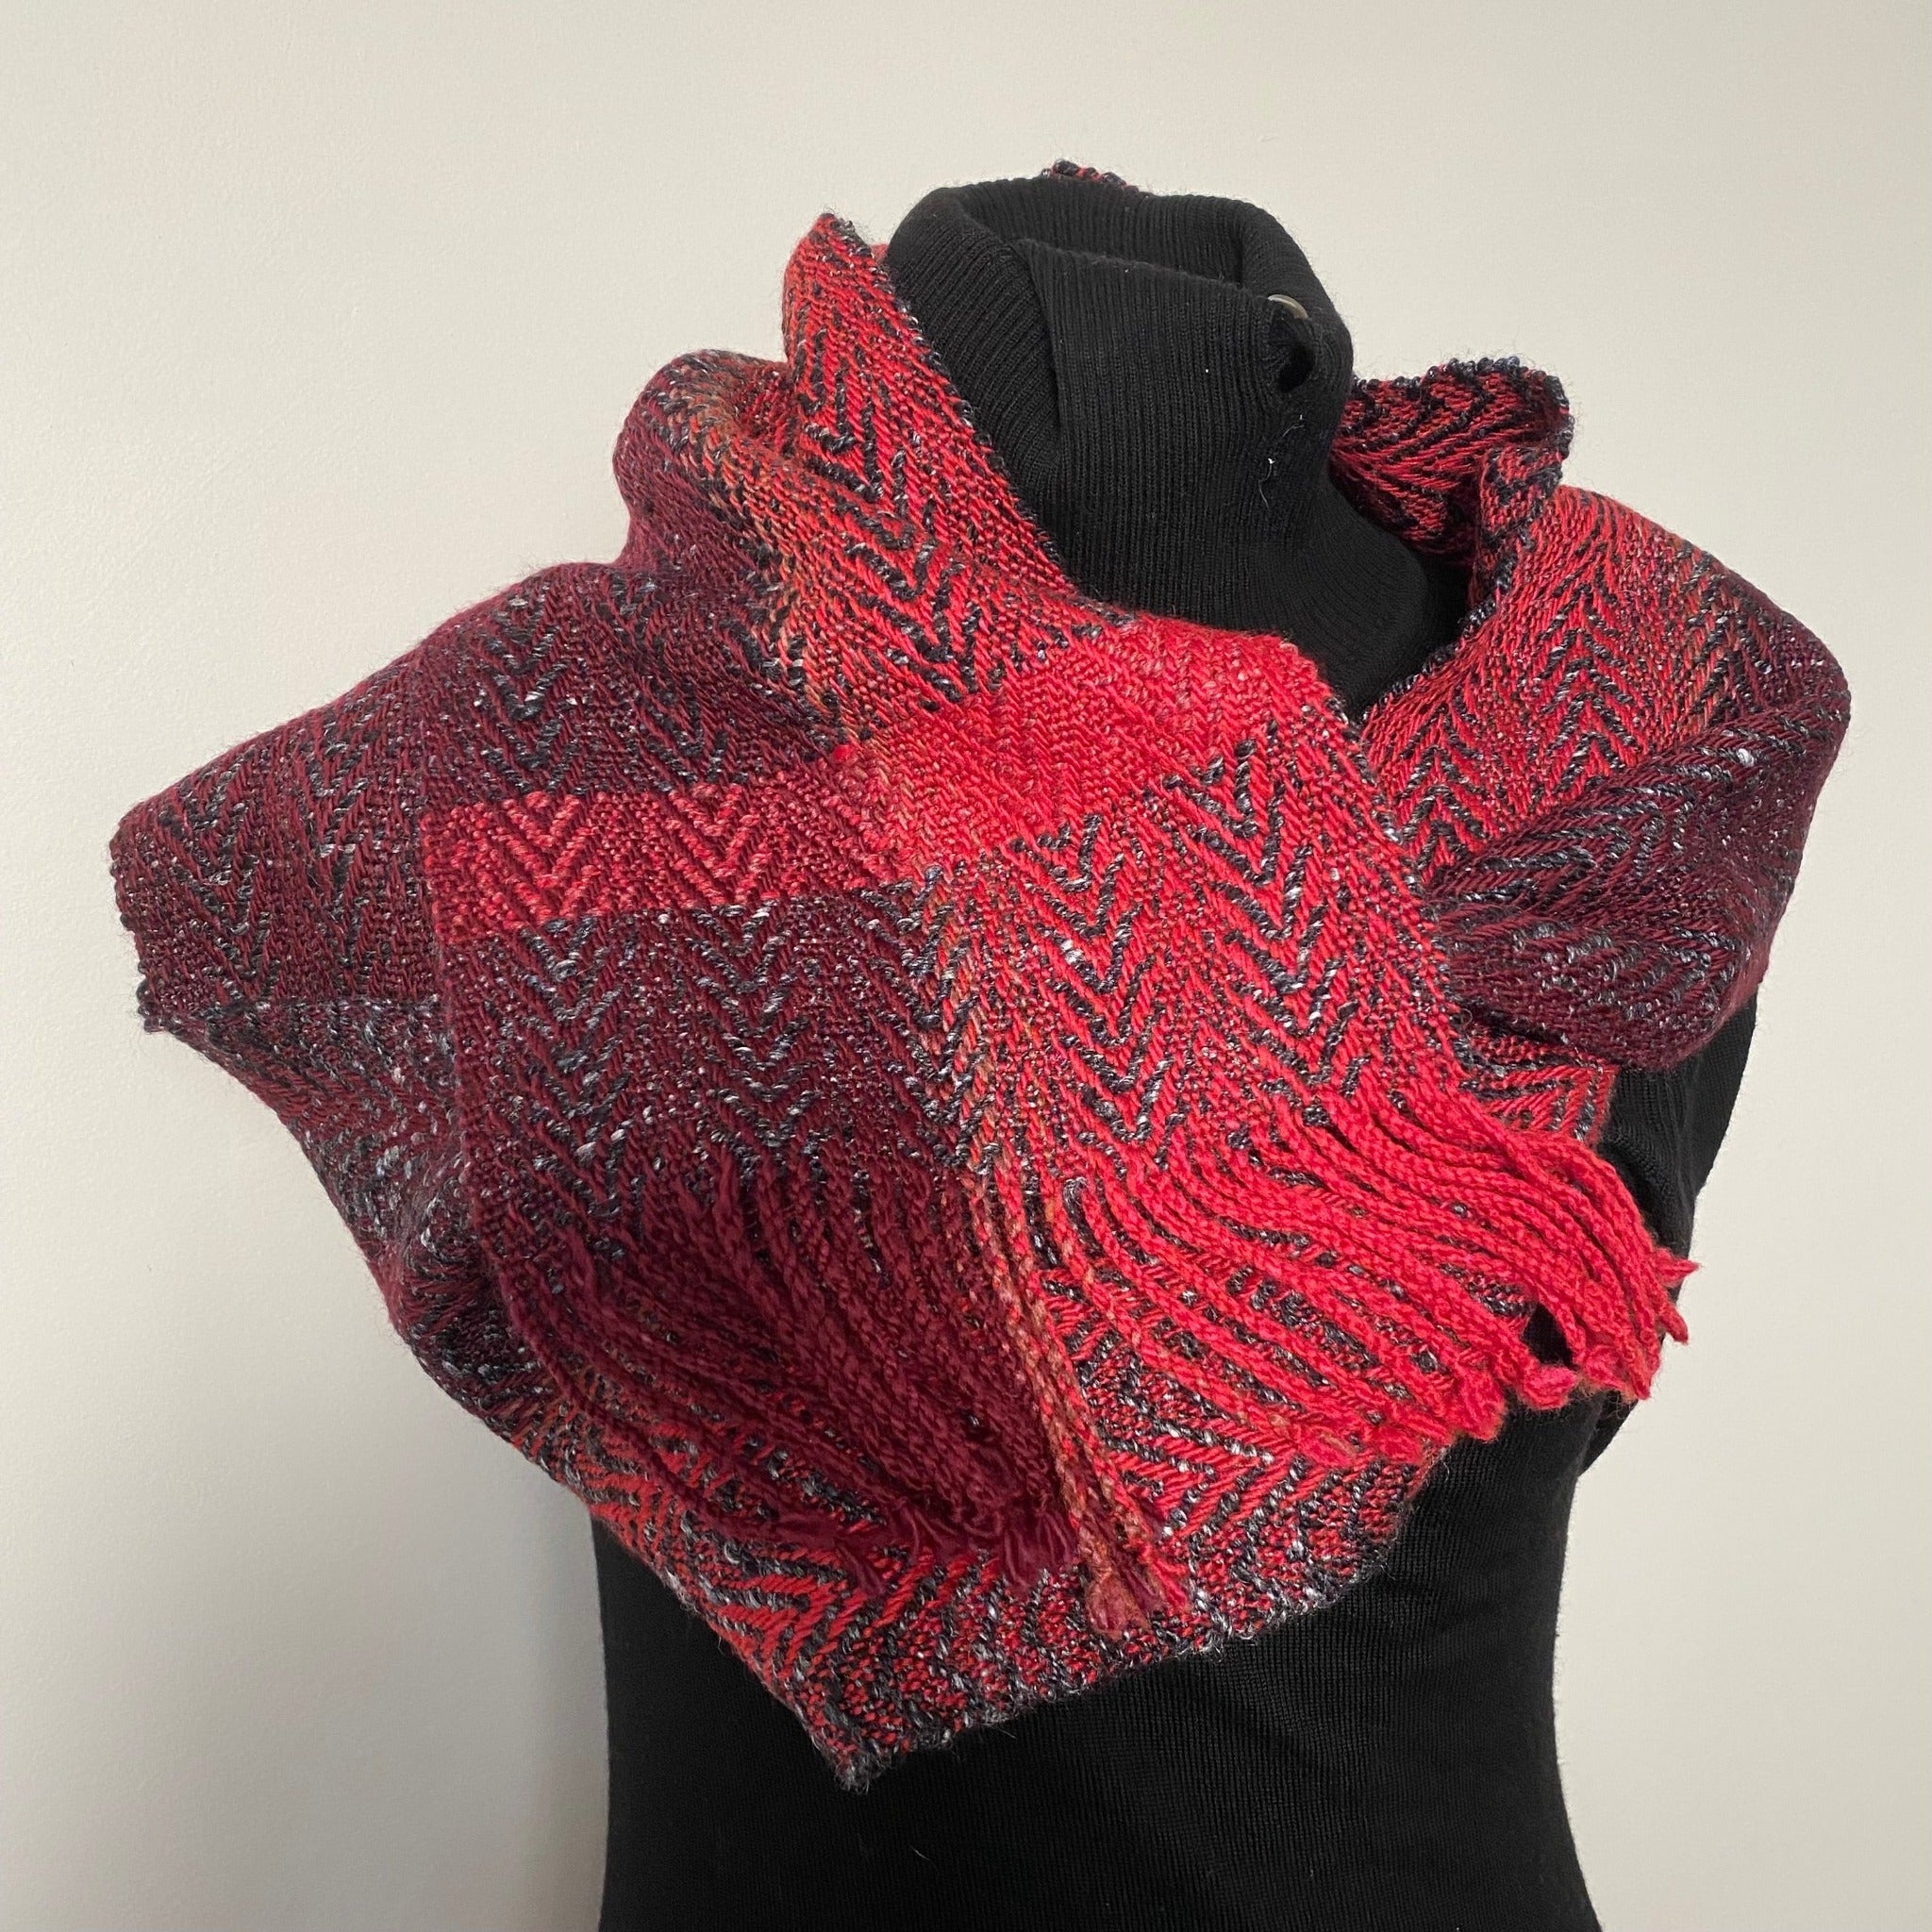 Handwoven scarf with handspun yarn by Joy Dodd